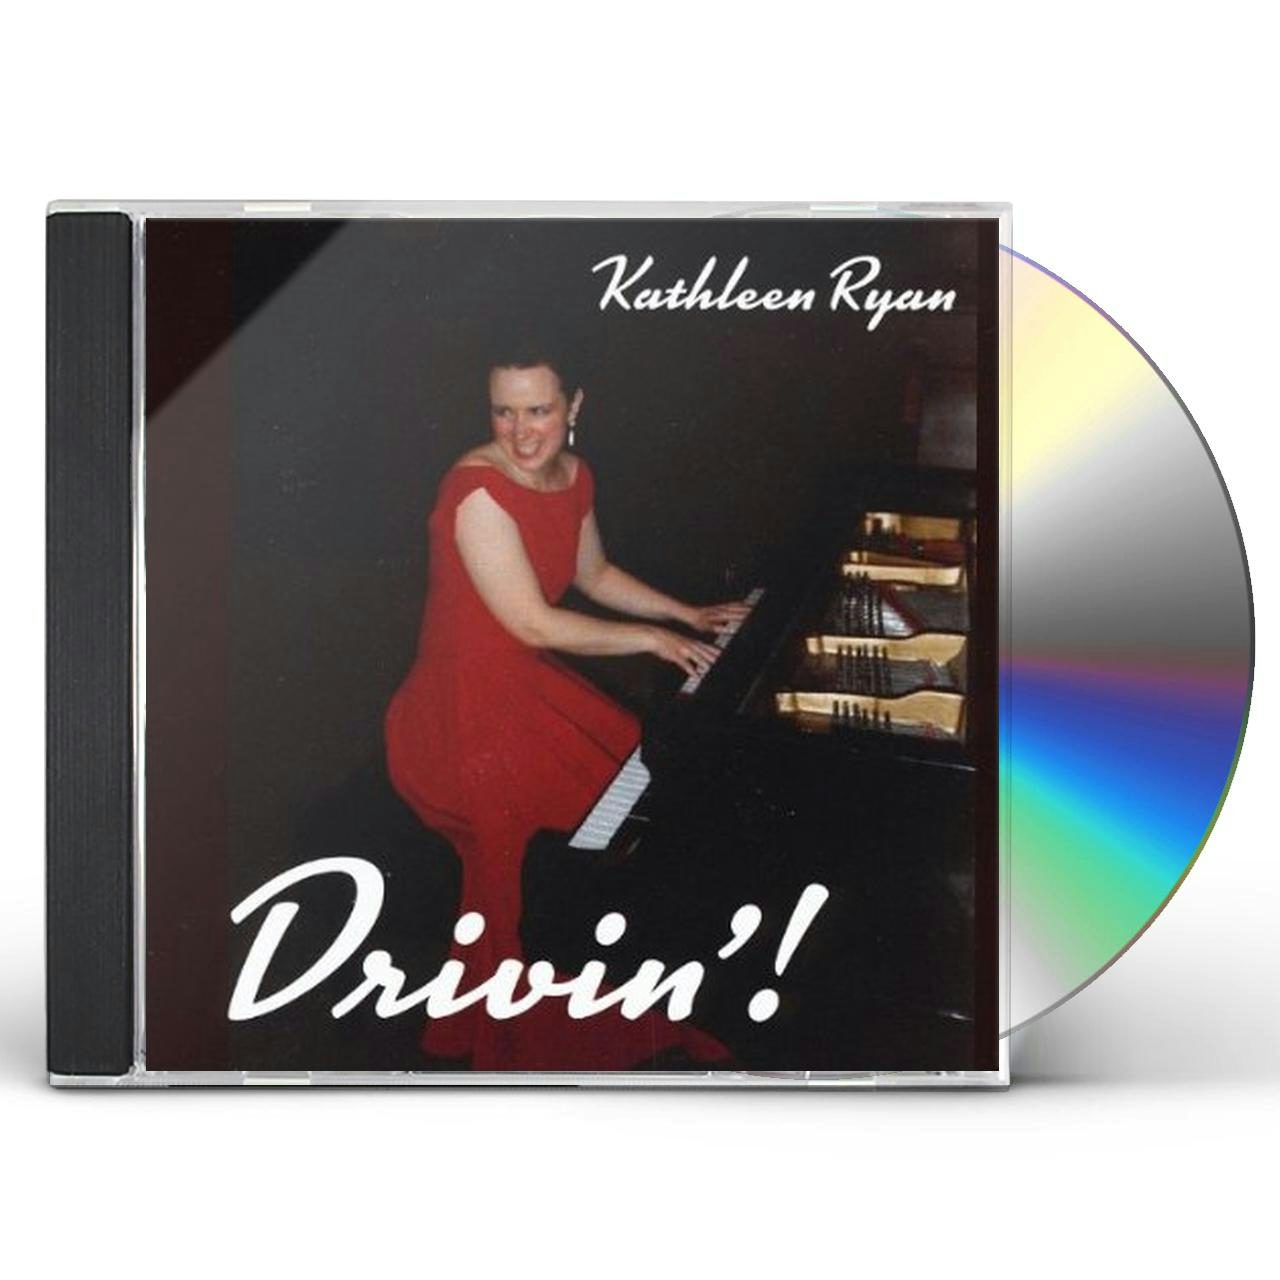 Kathleen Ryan Store: Official Merch & Vinyl